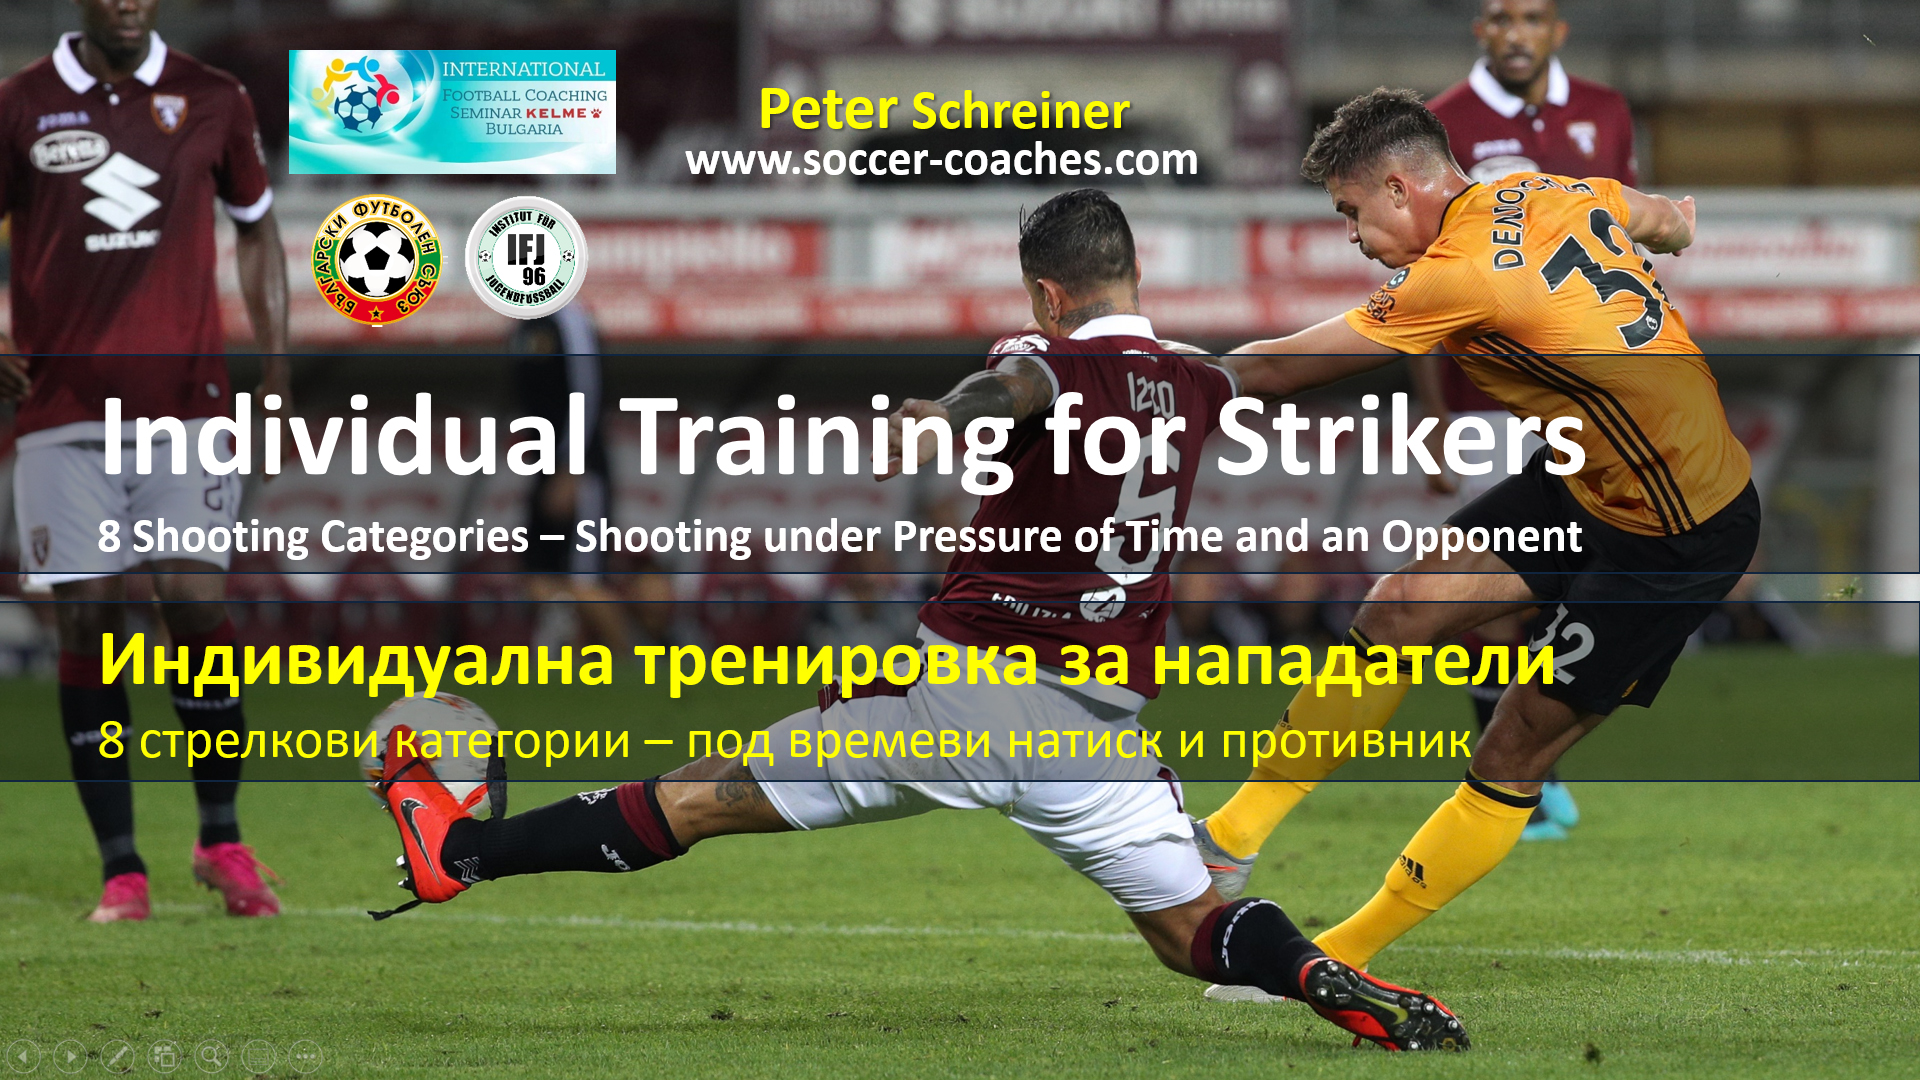 International coaching seminar with Peter Schreiner in Sofia / Bulgaria ...